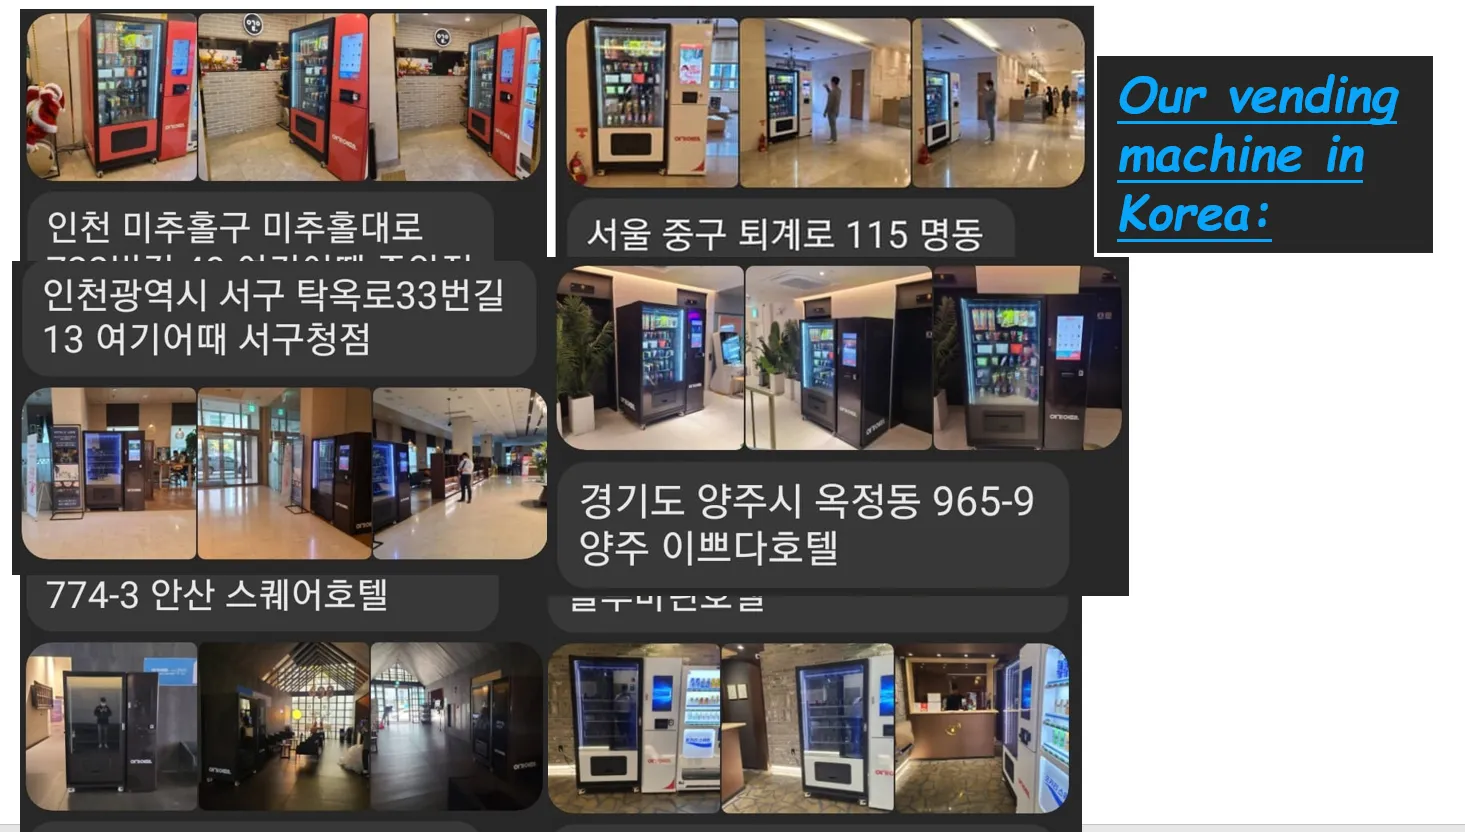 snack drink vending machine, xy elevator, snack drink glass bottle vending machine